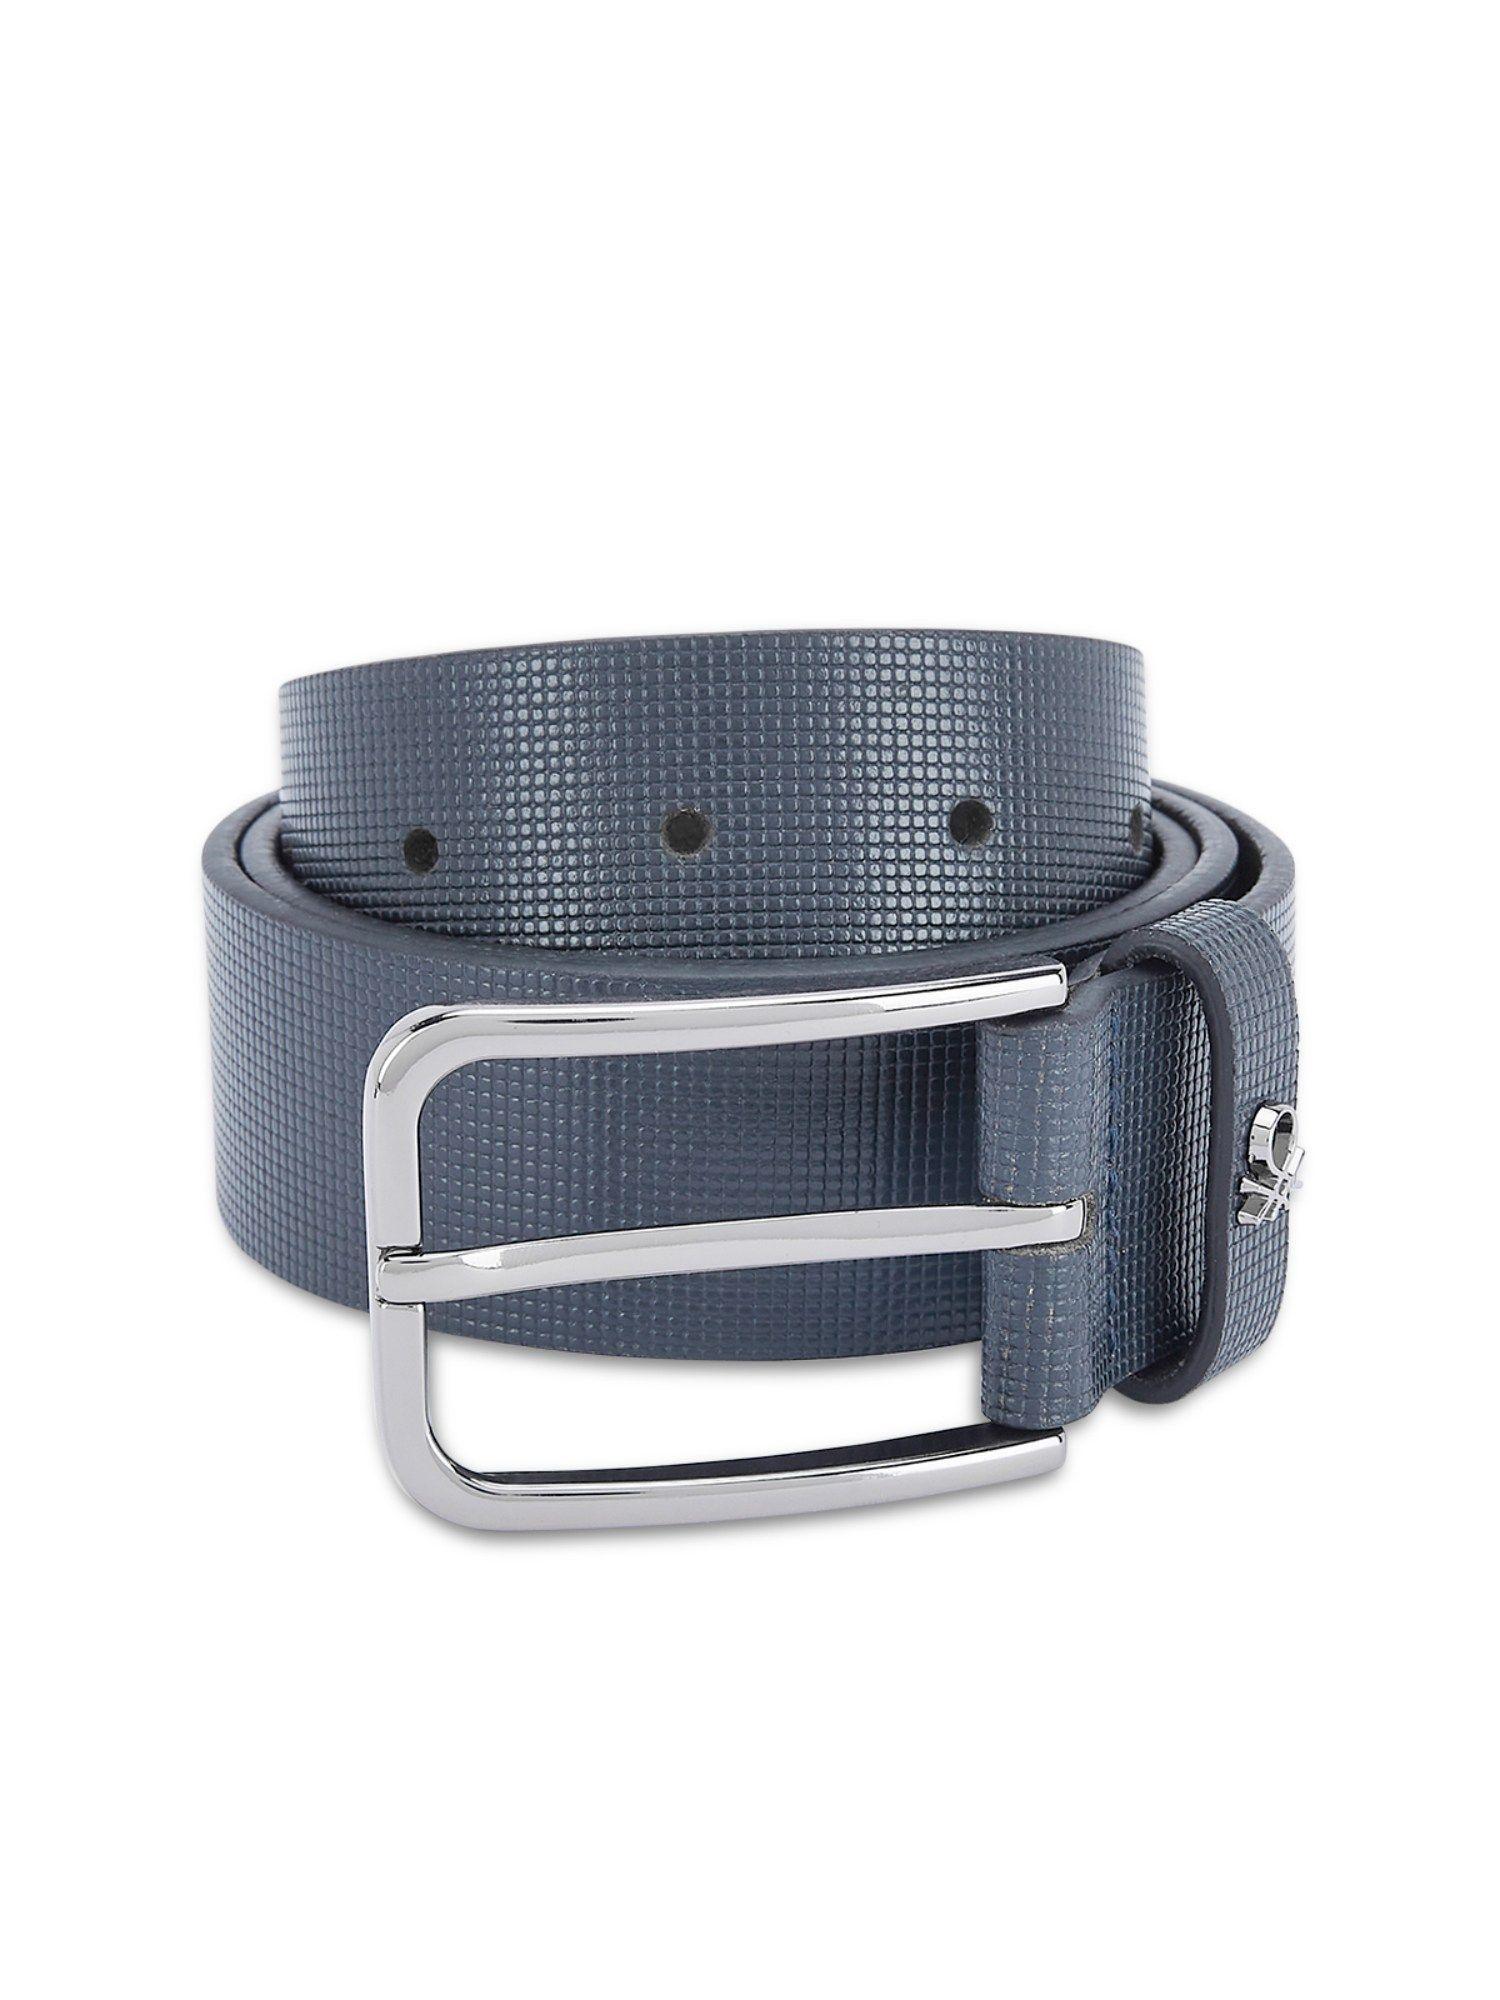 adriano men leather belt - navy blue